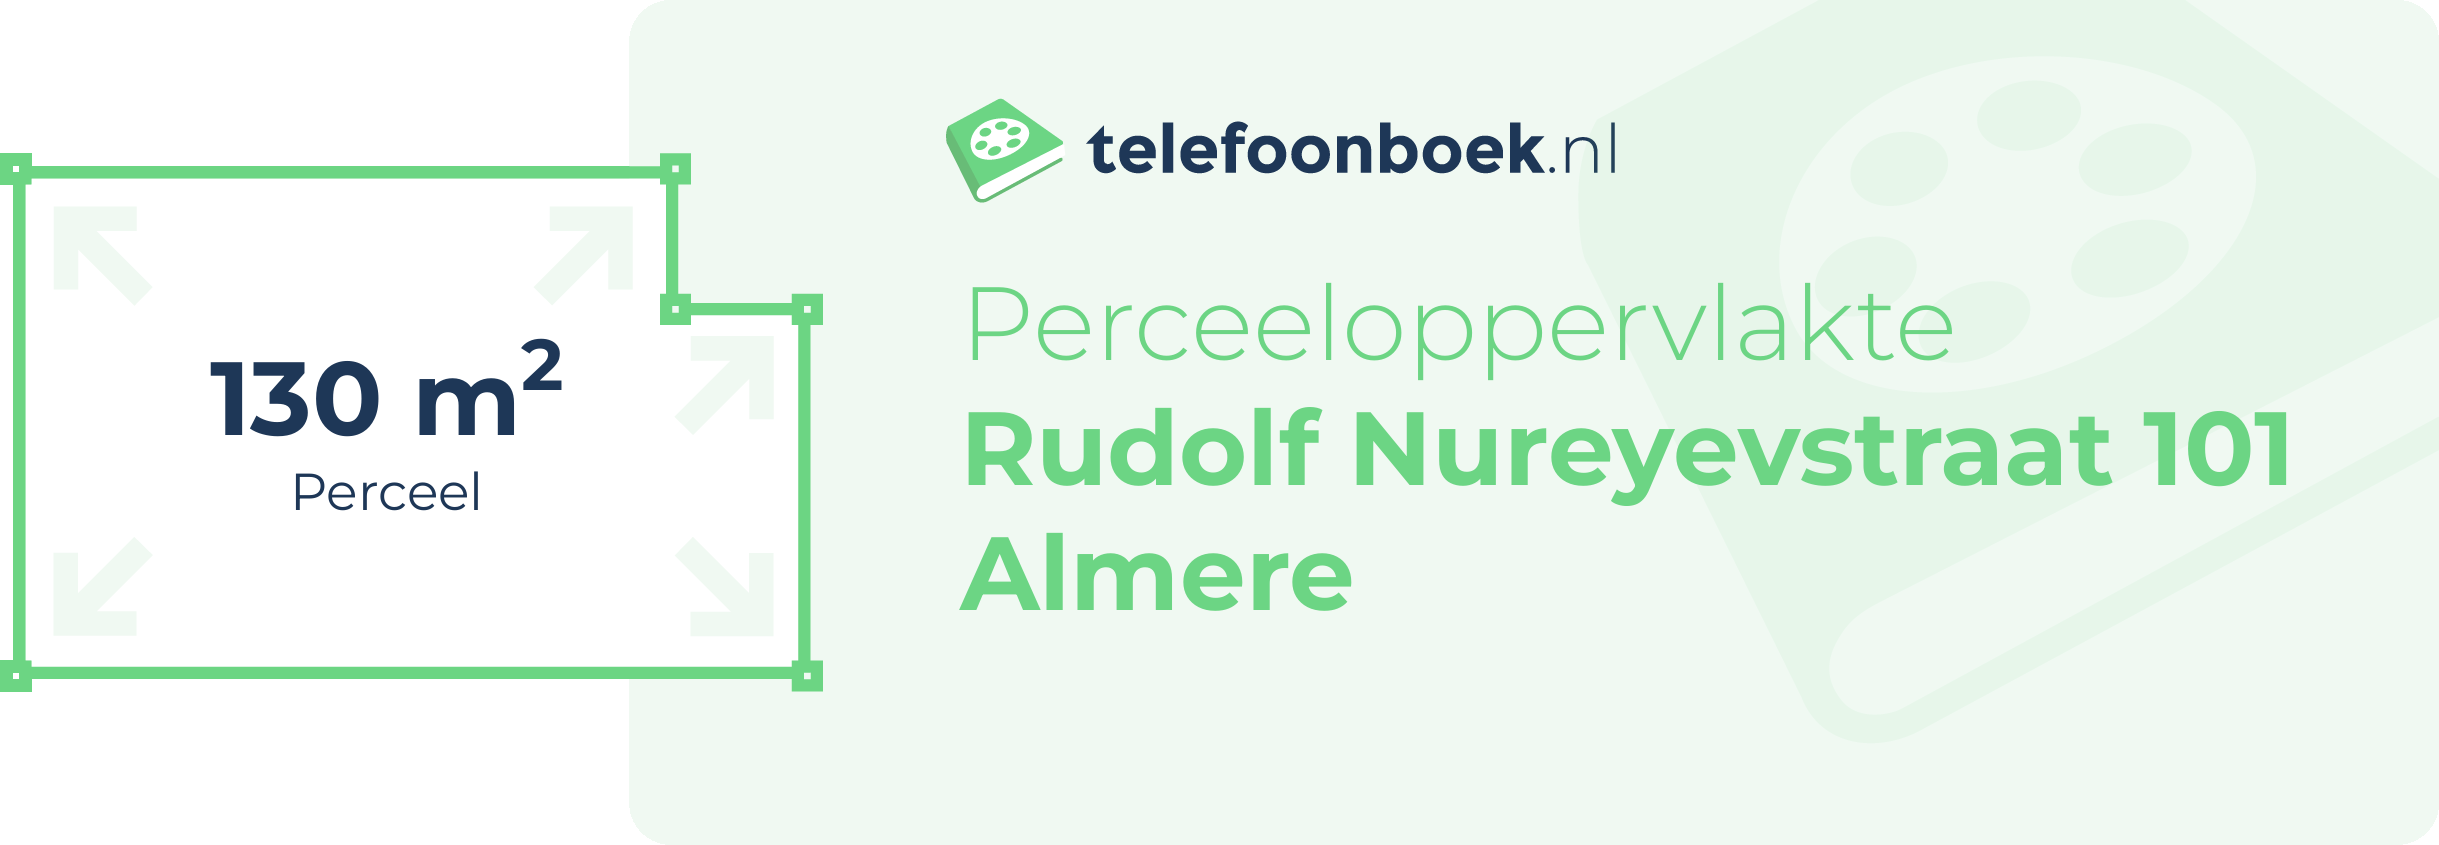 Perceeloppervlakte Rudolf Nureyevstraat 101 Almere